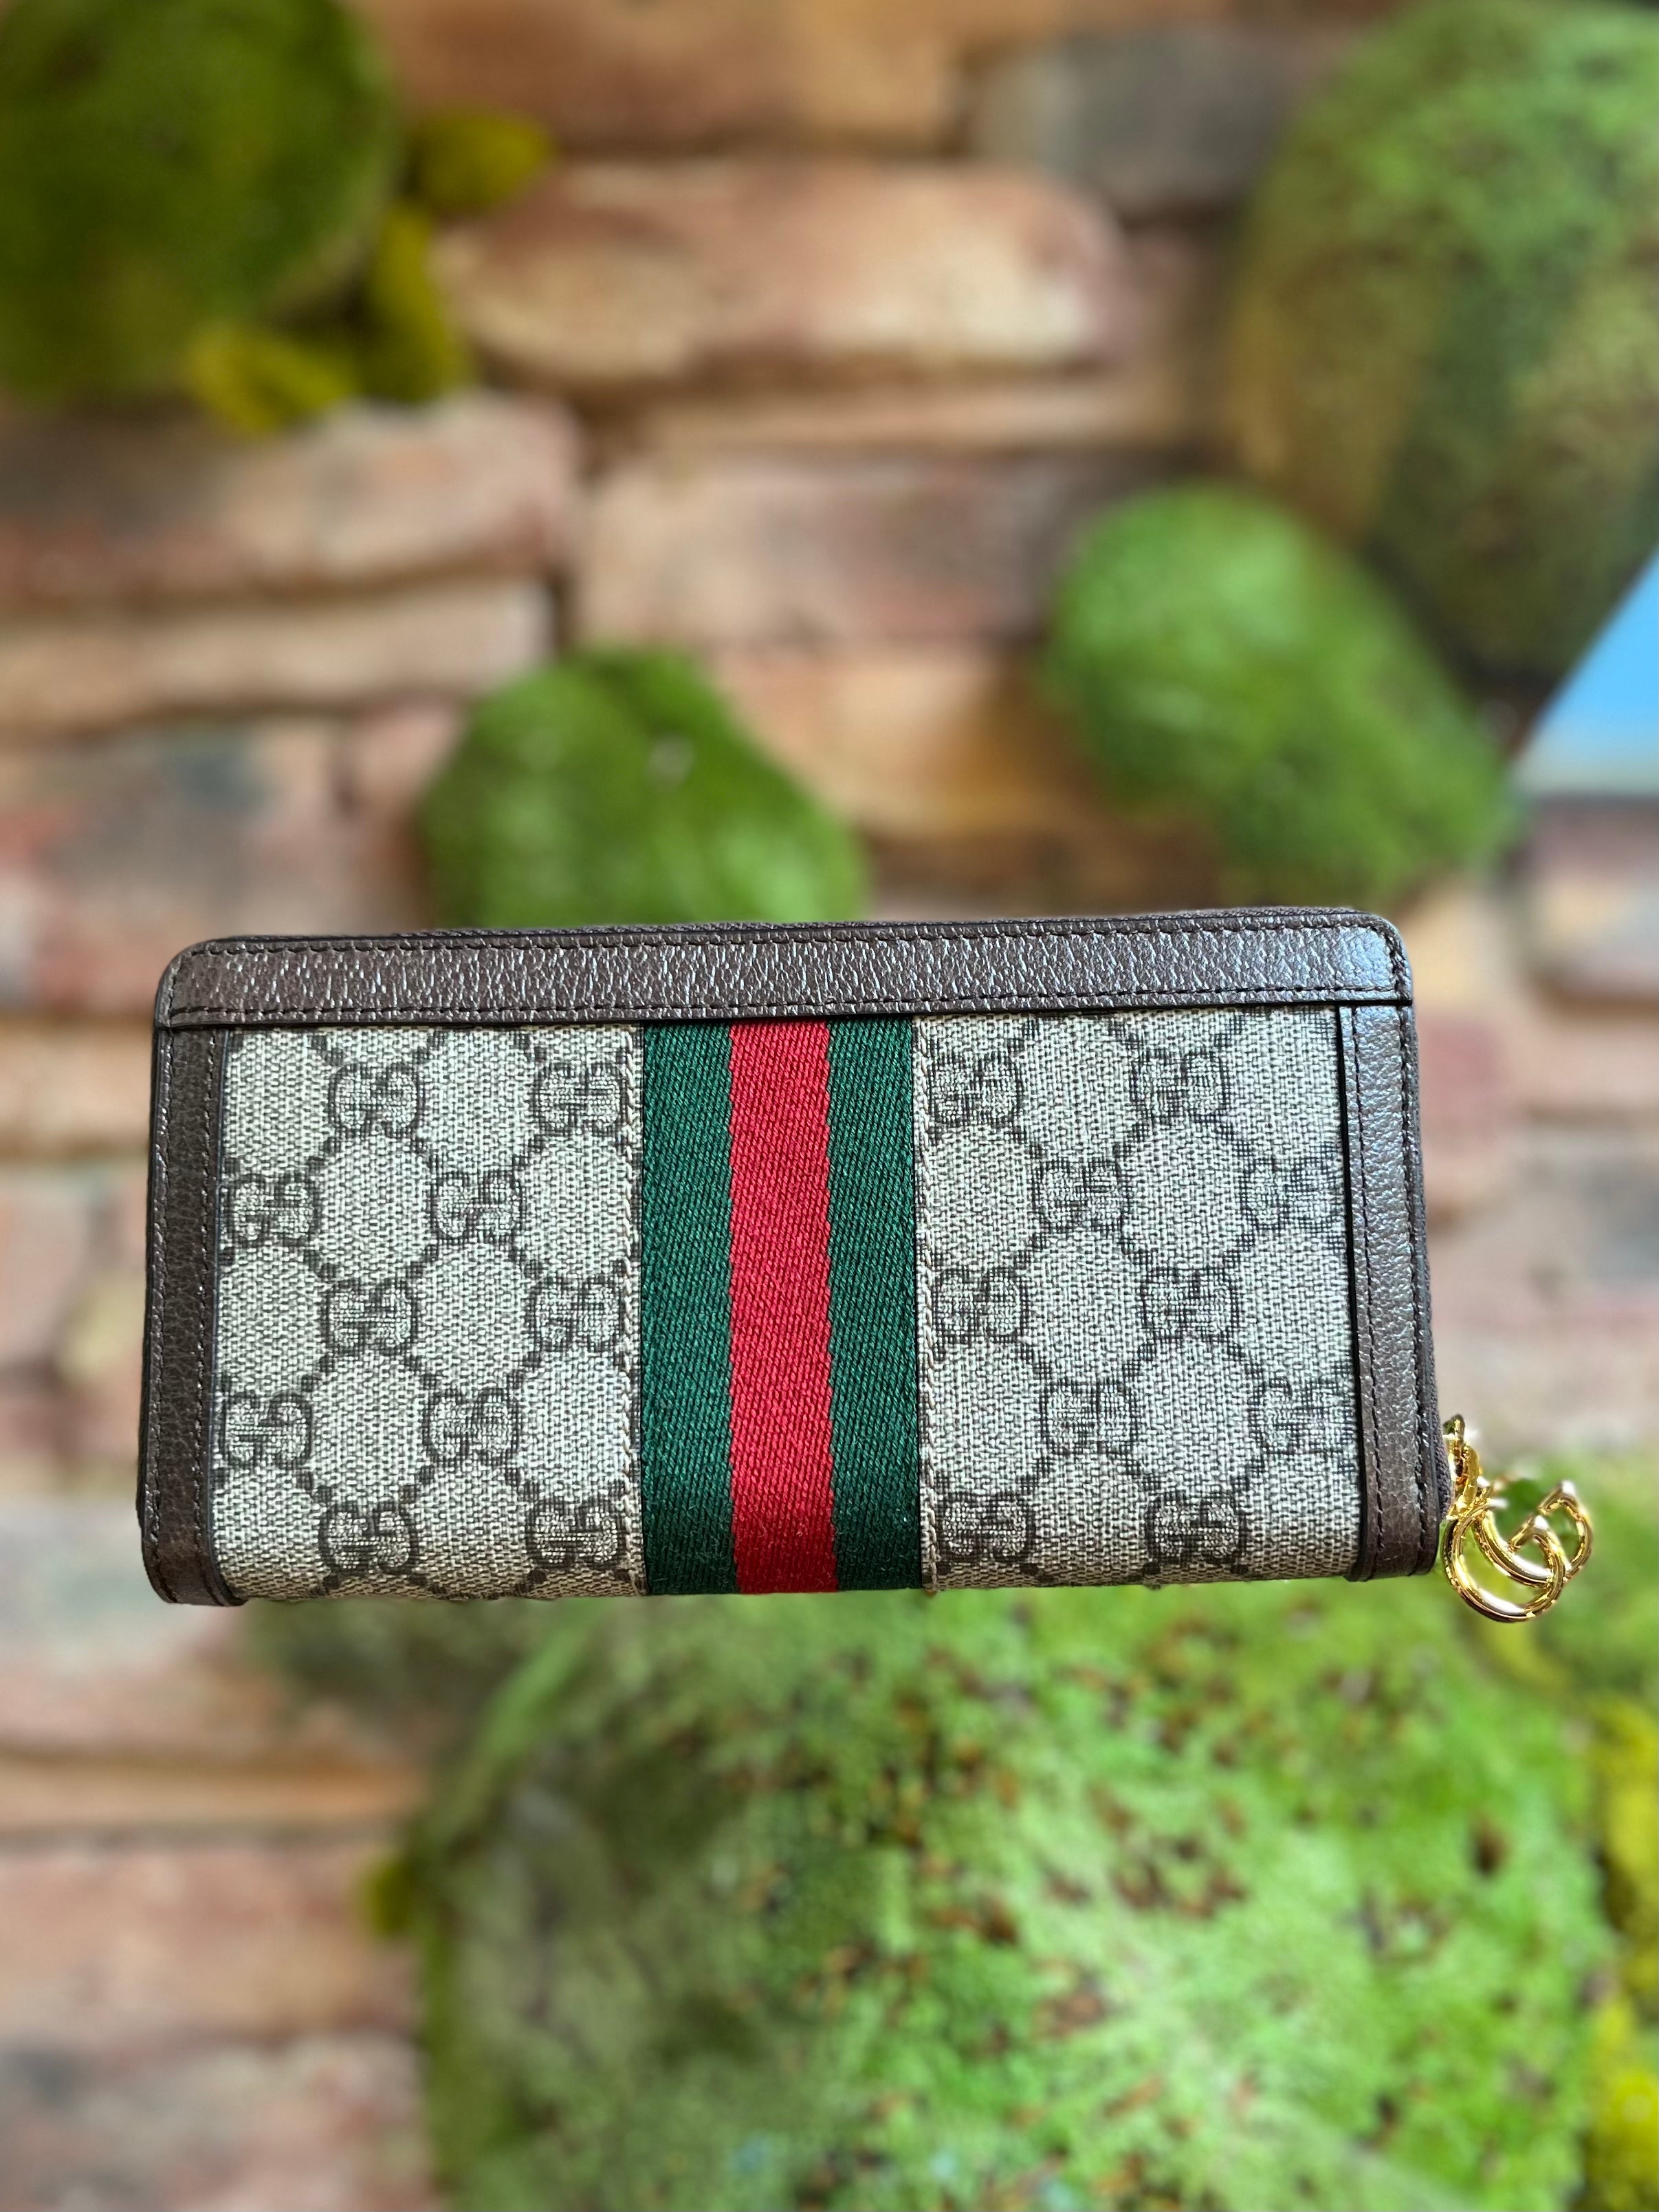 Gucci Beige/Black GG Supreme Canvas Bifold Continental Wallet